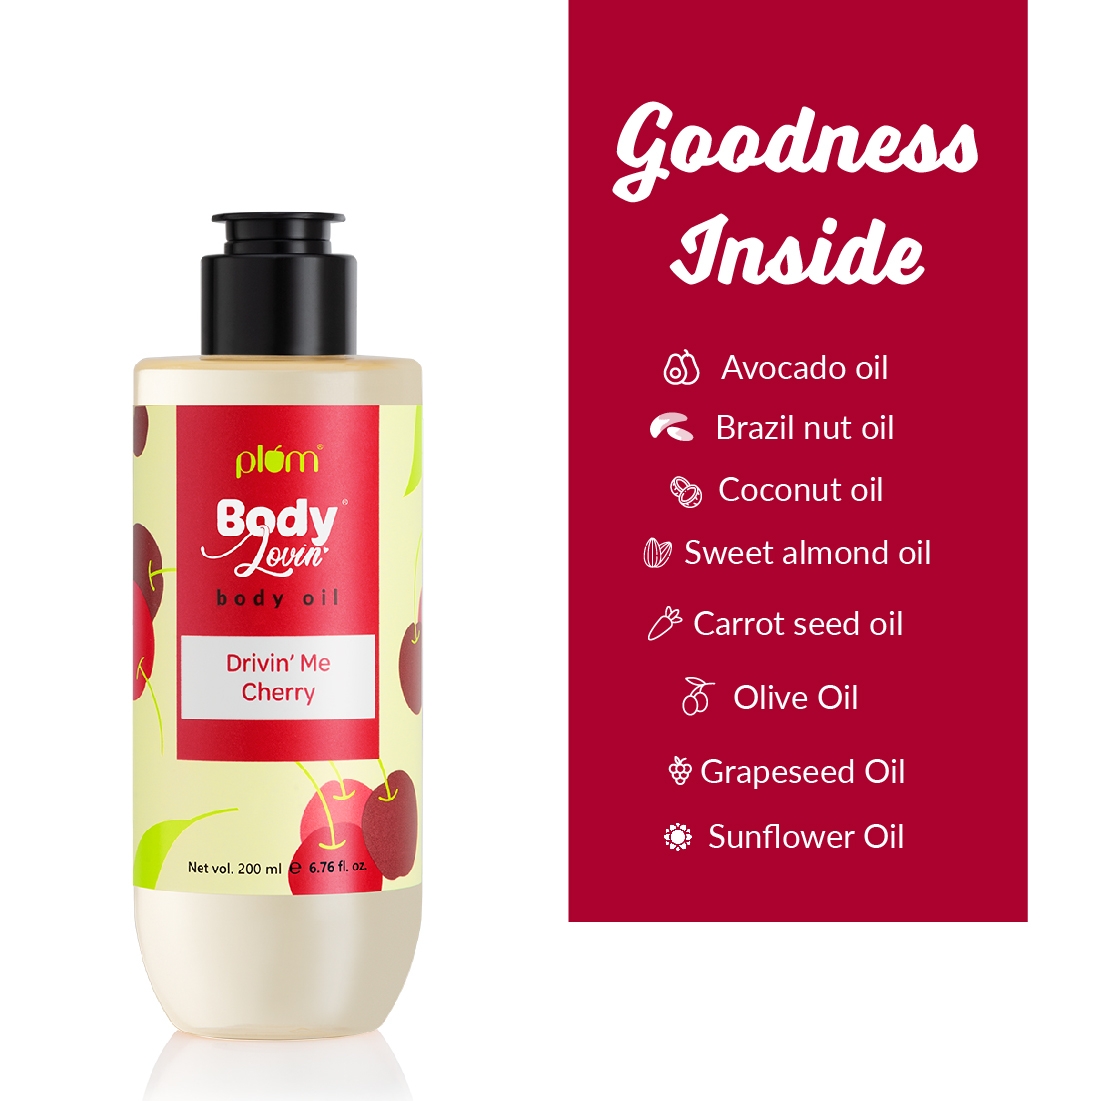 plum be good | Plum BodyLovin' Drivin’ Me Cherry Body Oil 1